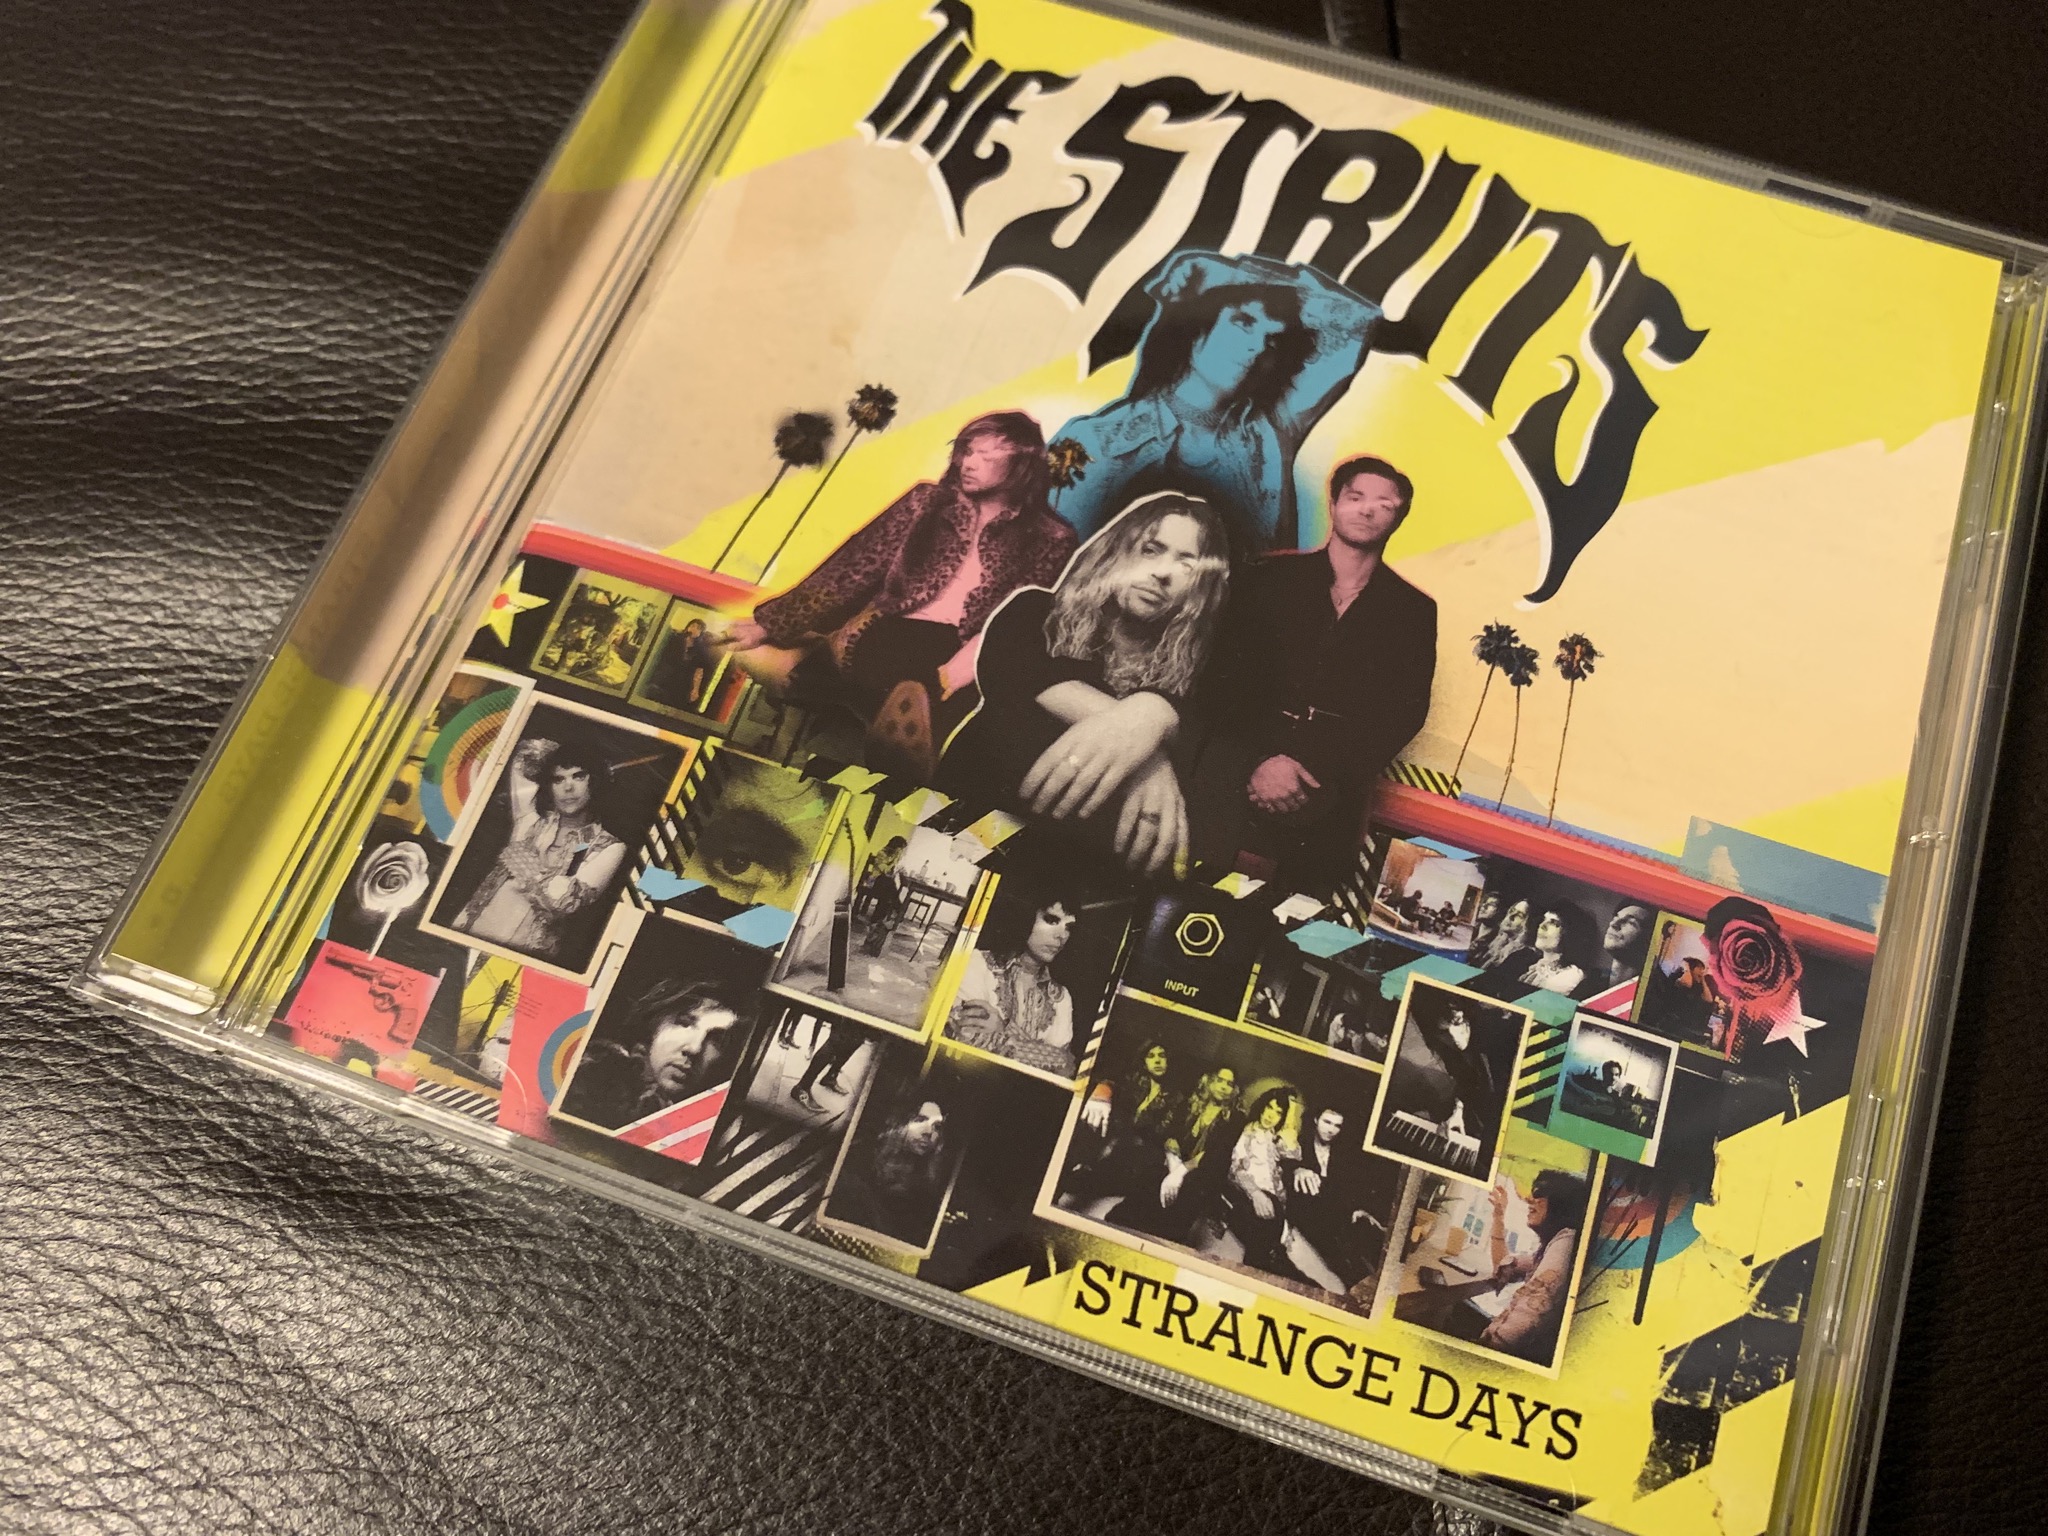 The Strutsの3rdアルバム『Strange Days』が素晴らしい